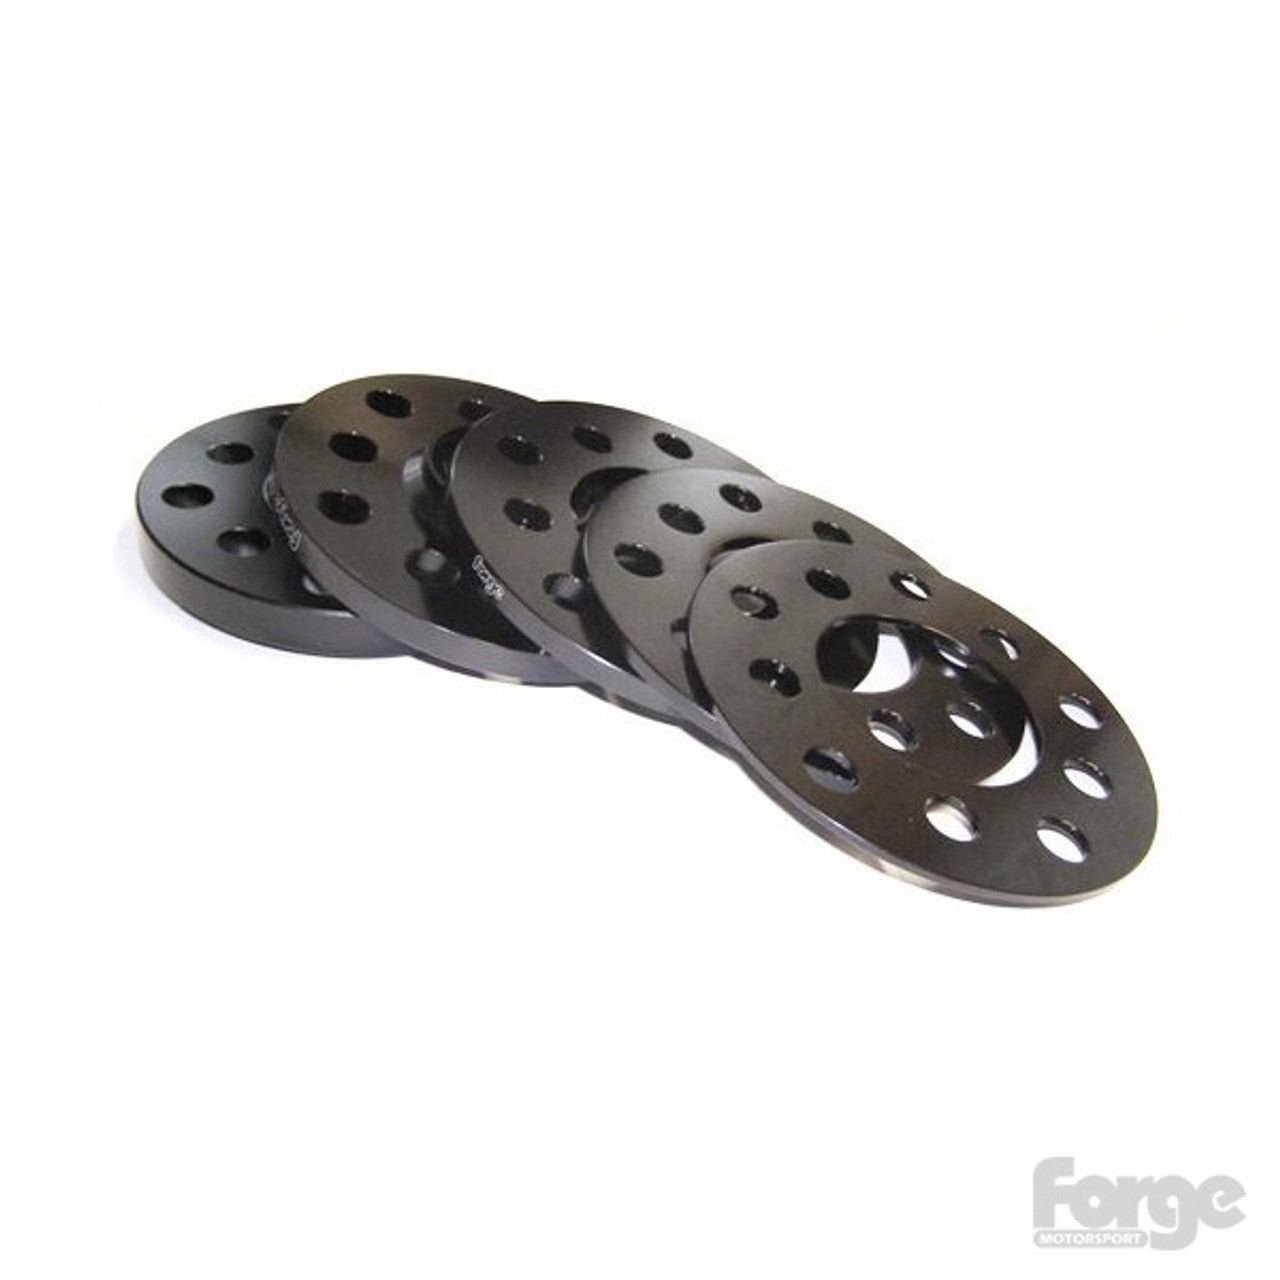 Forge 5mm (per side) flat